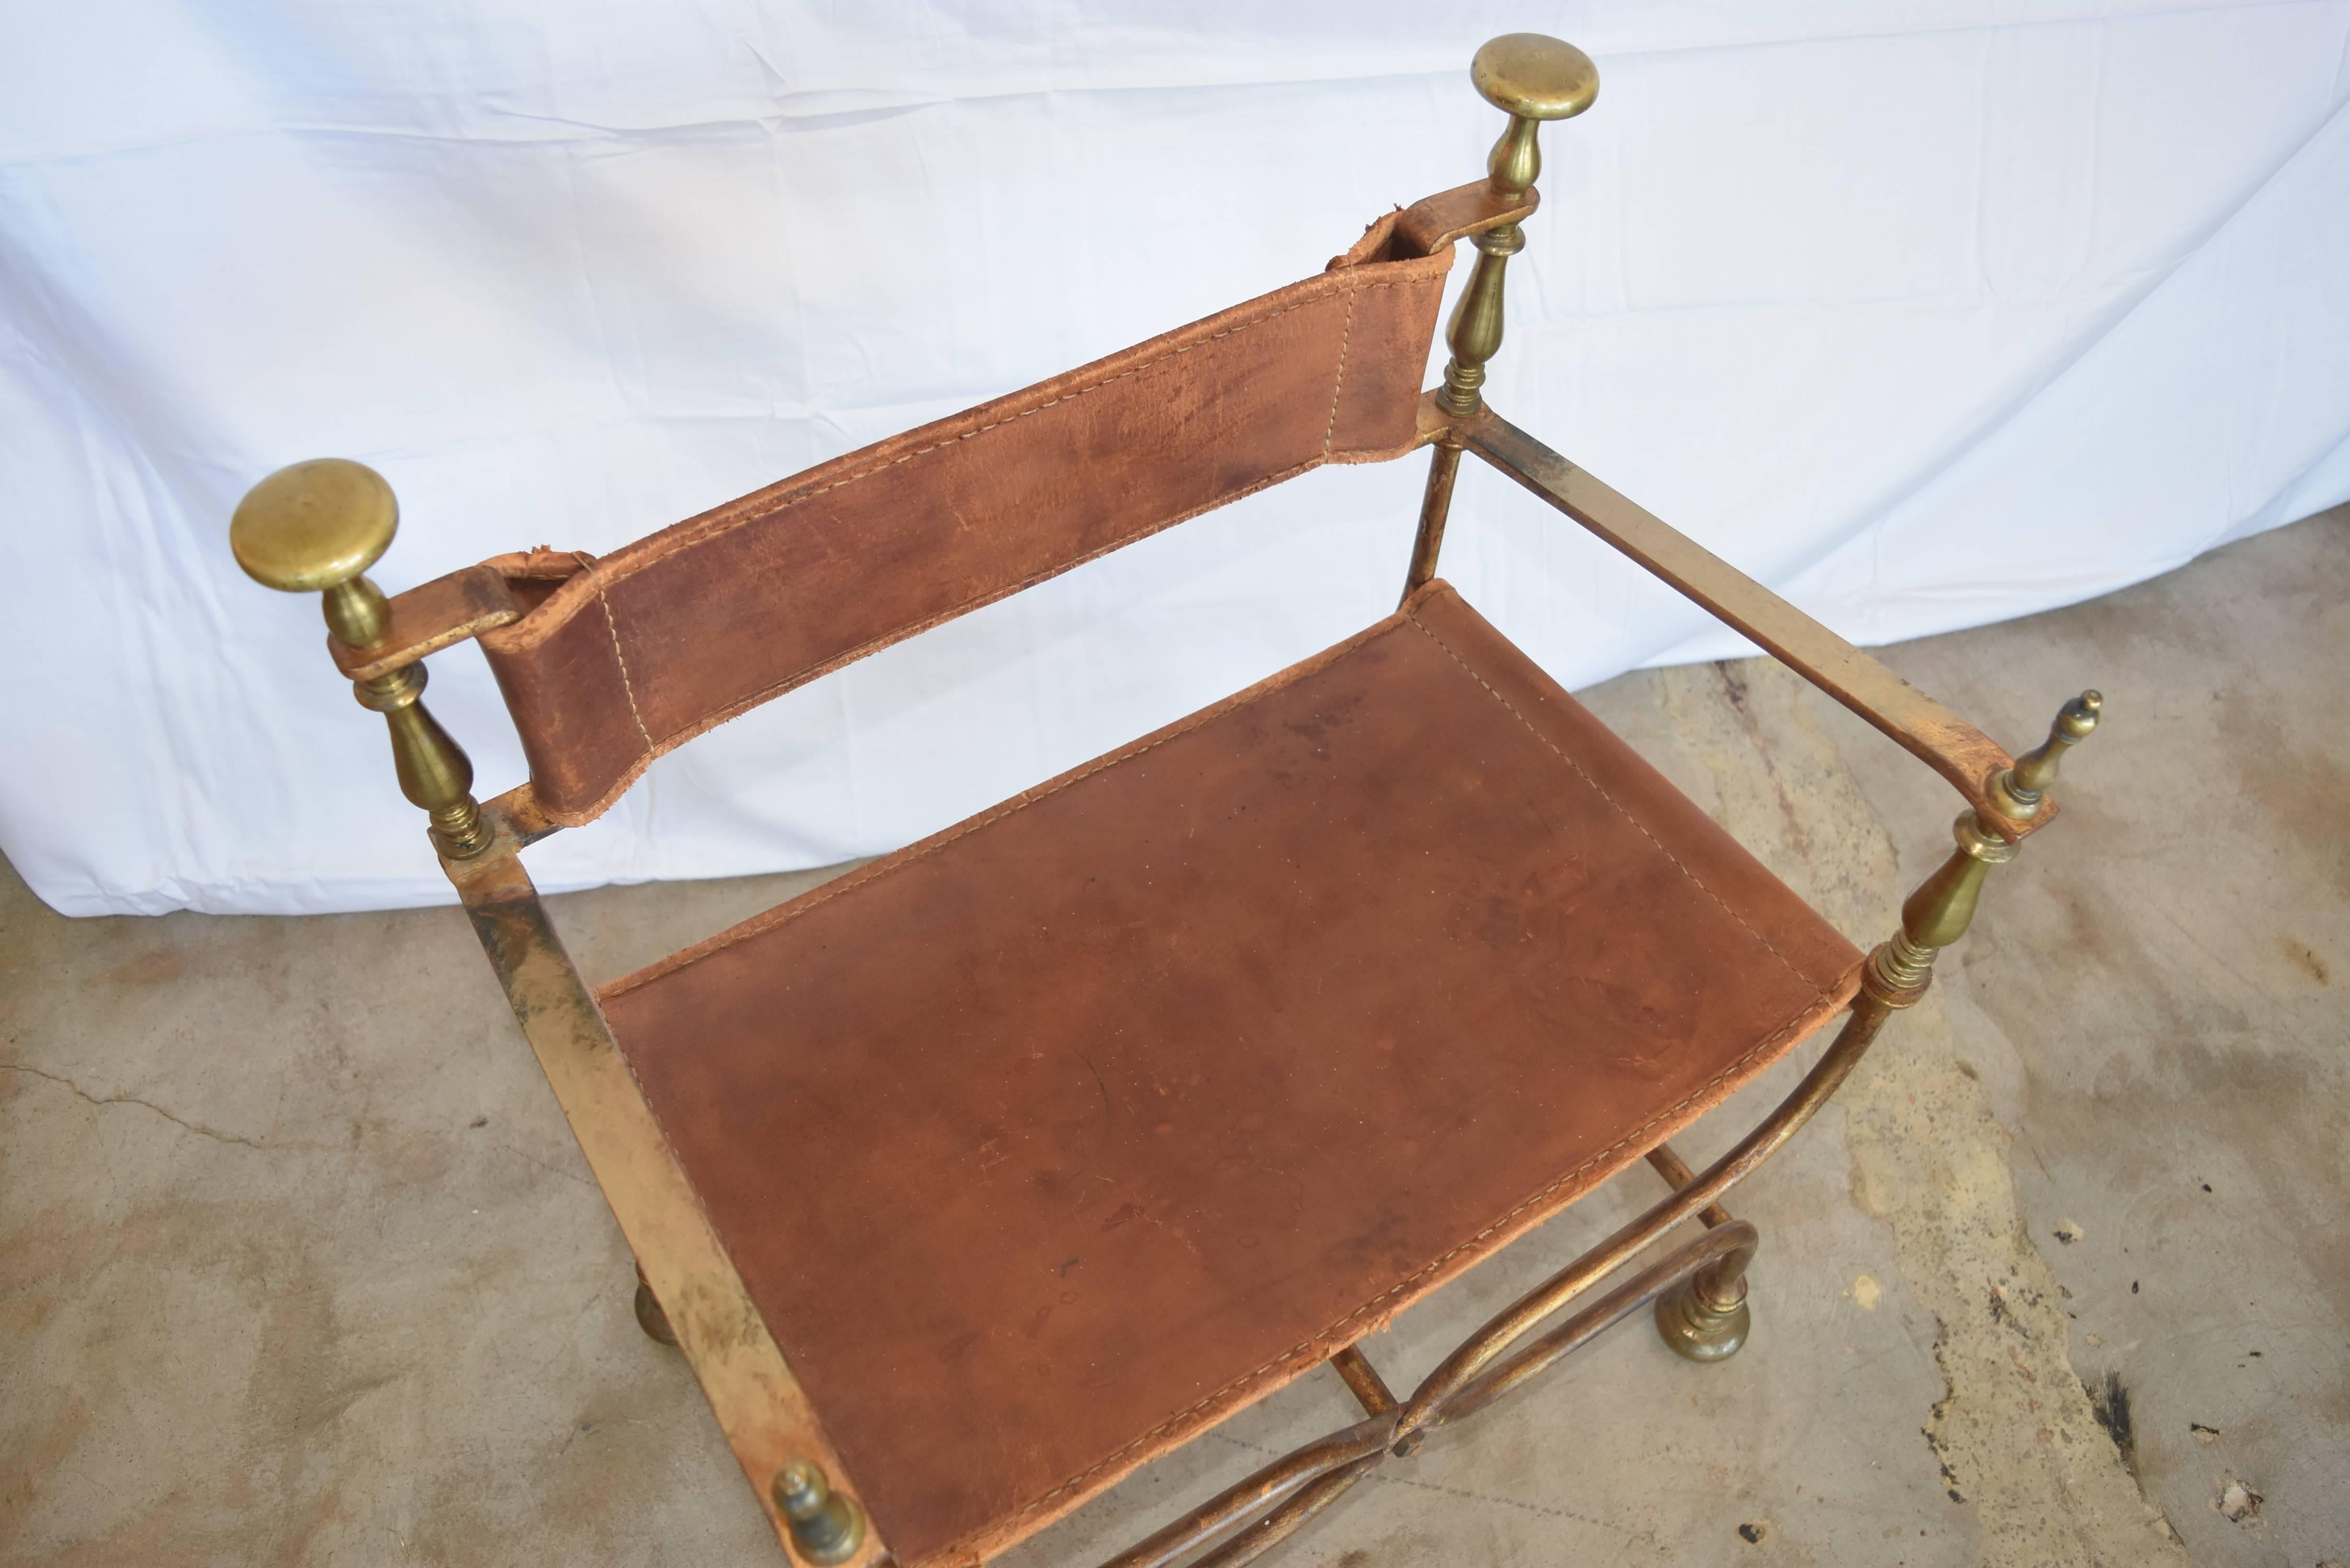 19th Century Savonarola Turn of the Century Spanish Iron and Brass Chair with Cognac Leather